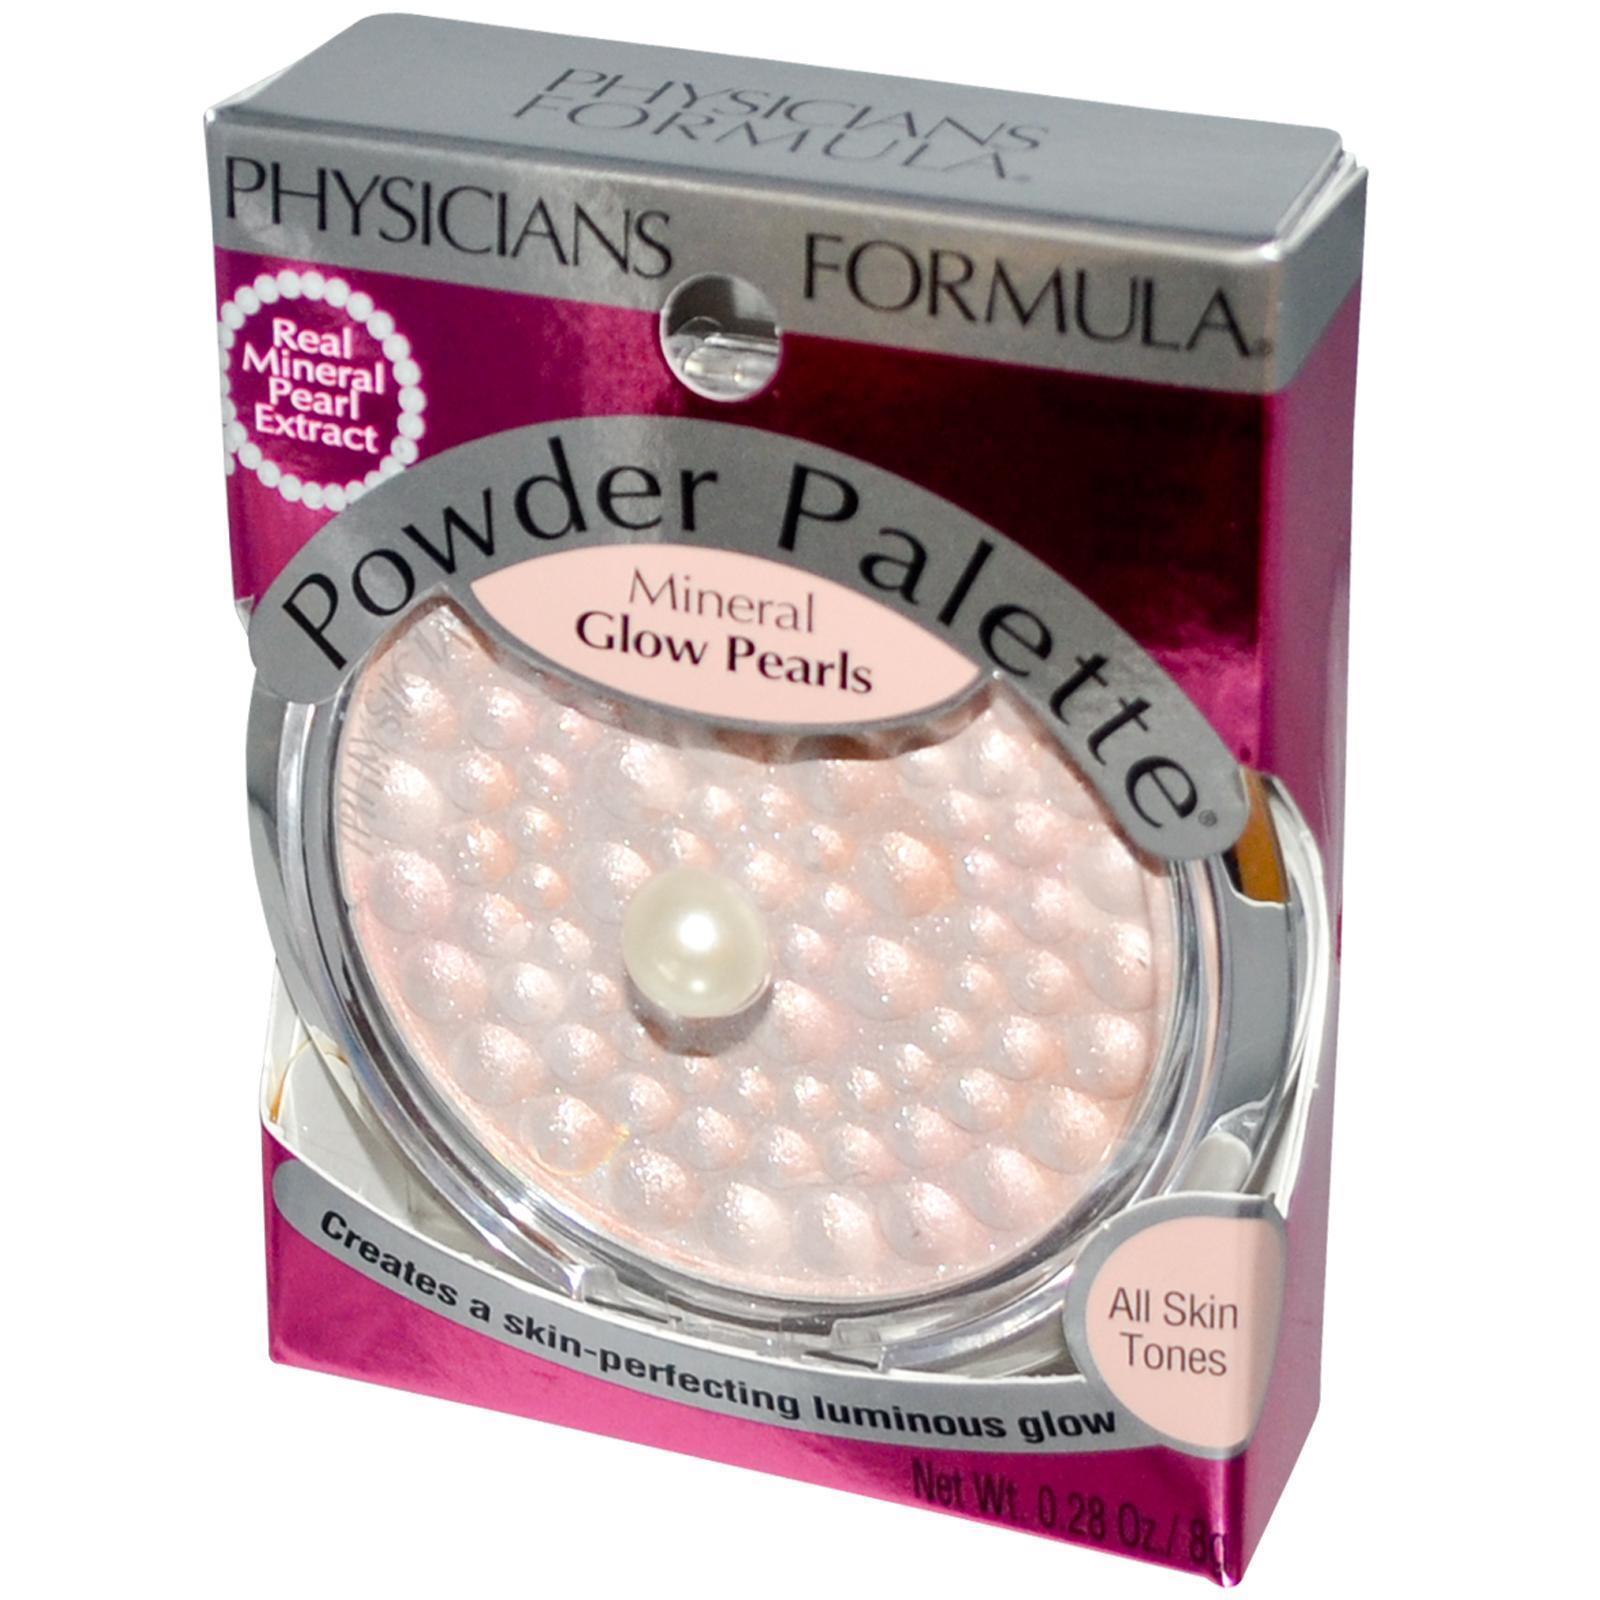 Physicians Formula - Physician's Formula Powder Paleta, Mineral Glow Pearls, Translucent Pearl